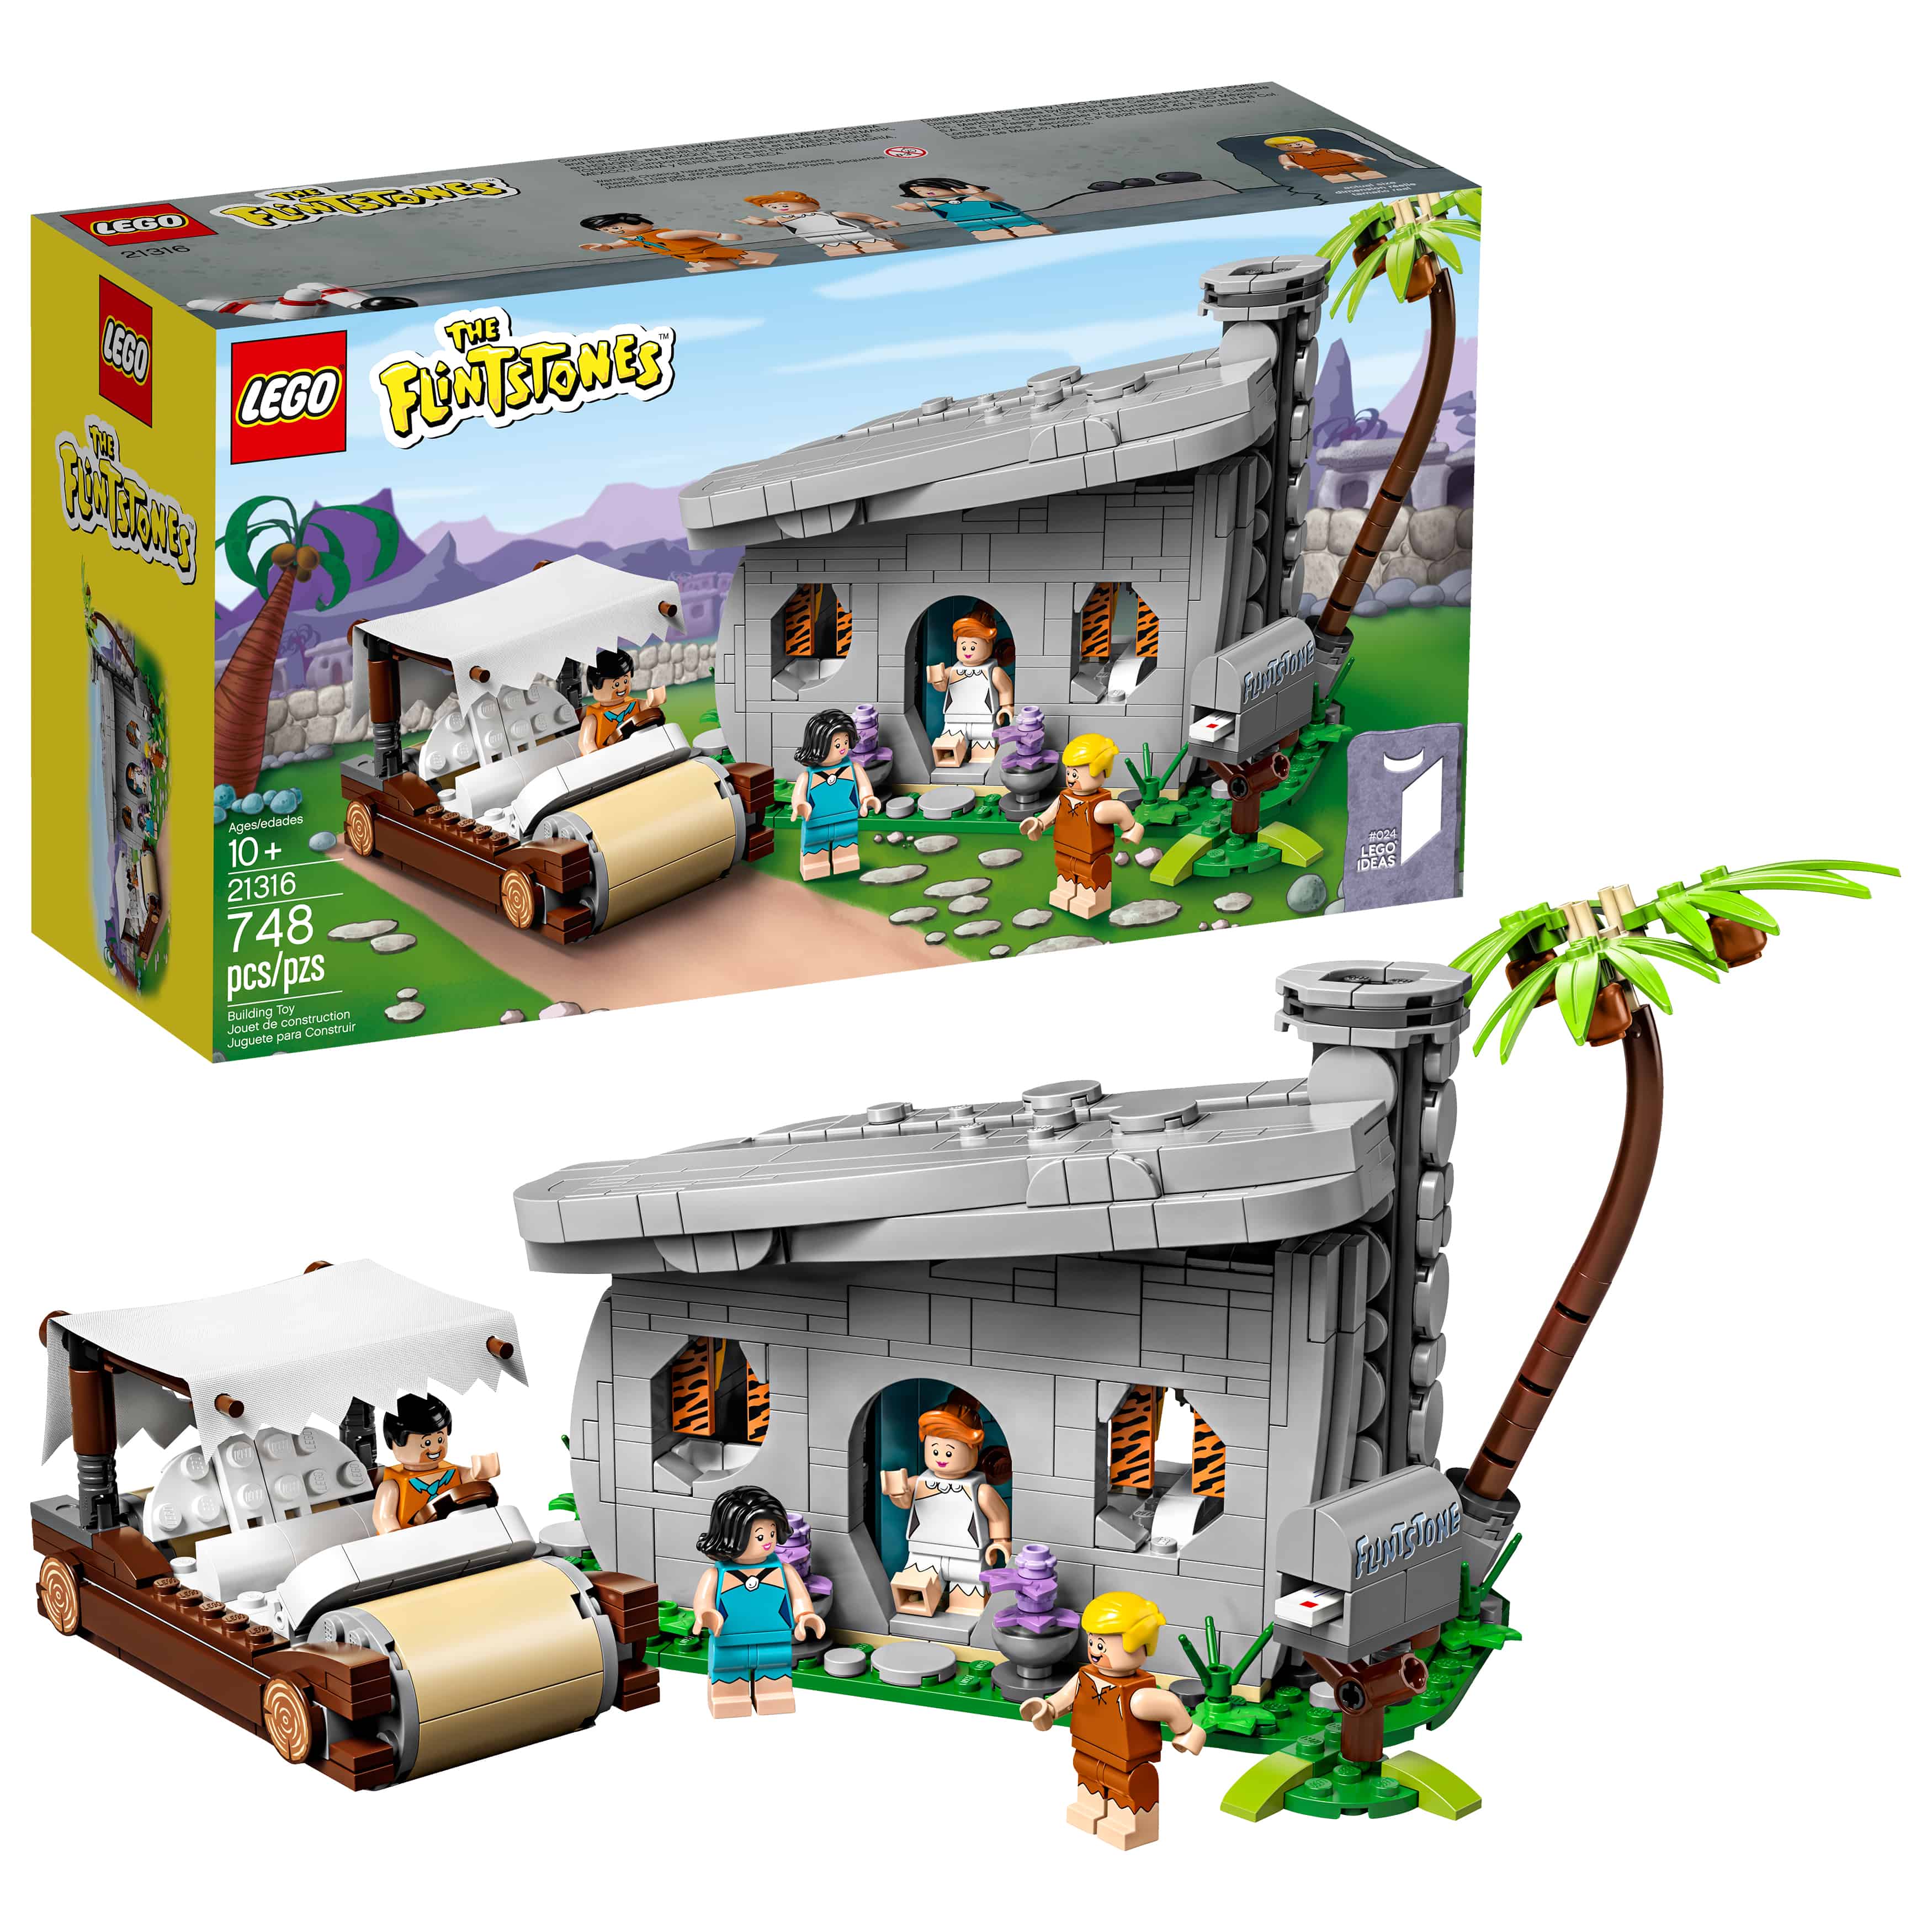 LEGO The Flintstones Building Kit $48 {Reg $60}